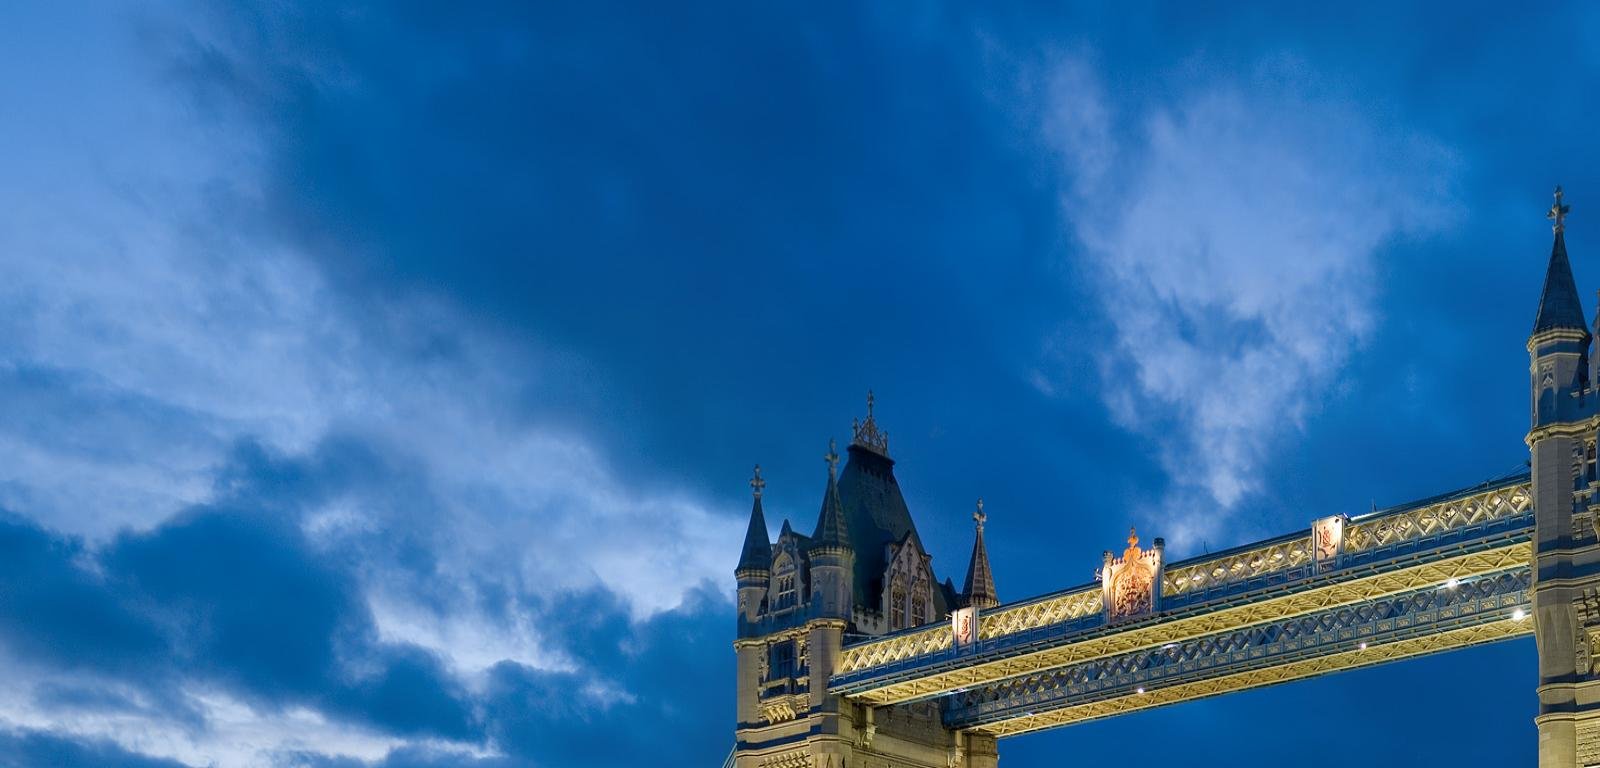 Best Tower Bridge wallpaper ID:484235 for High Resolution hd 1600x768 computer